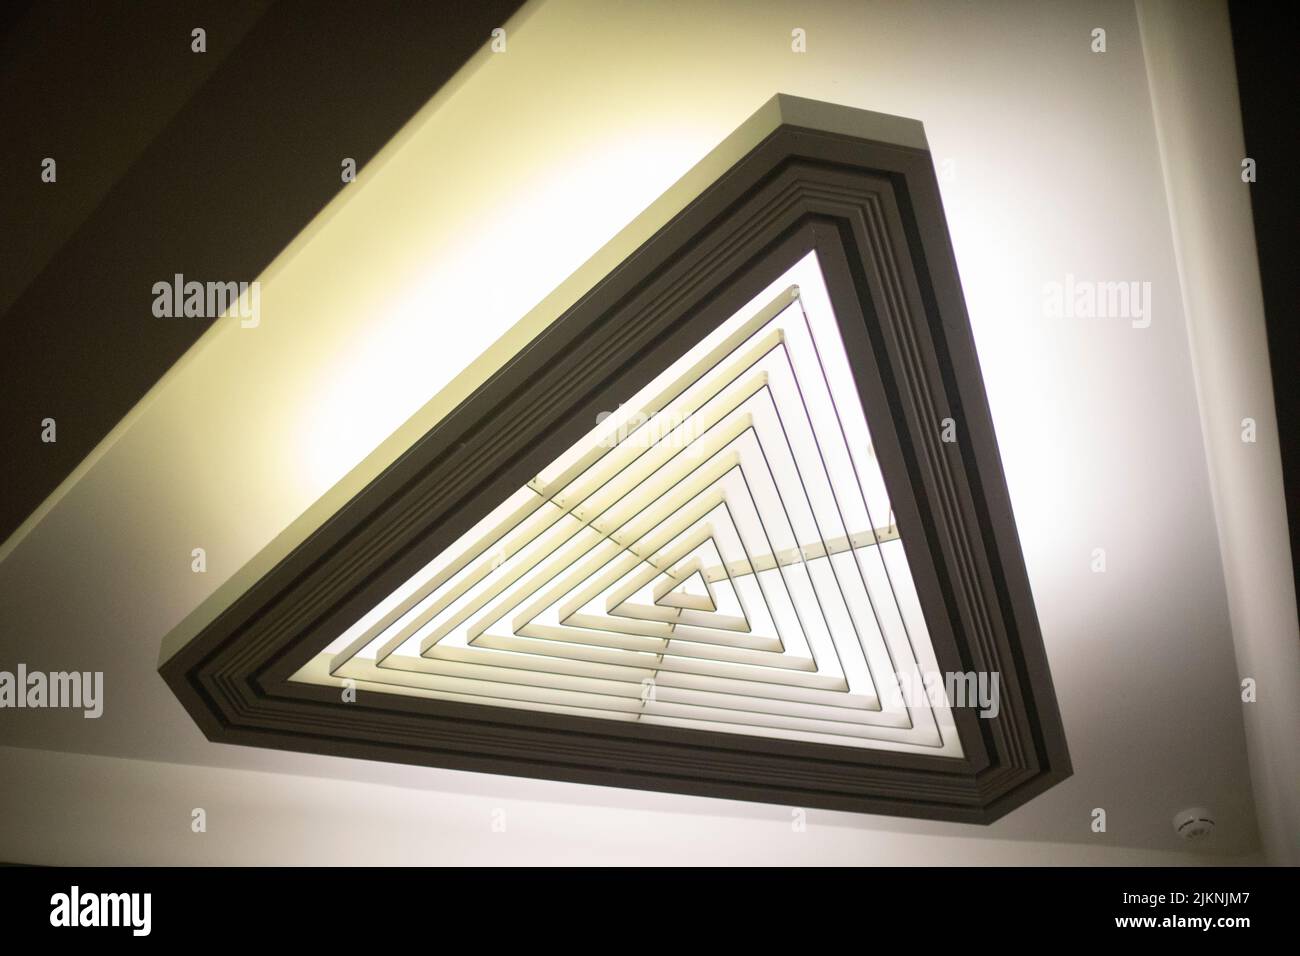 Lamps in interior. Light in room. Ceiling in apartment. Light design. Stock Photo